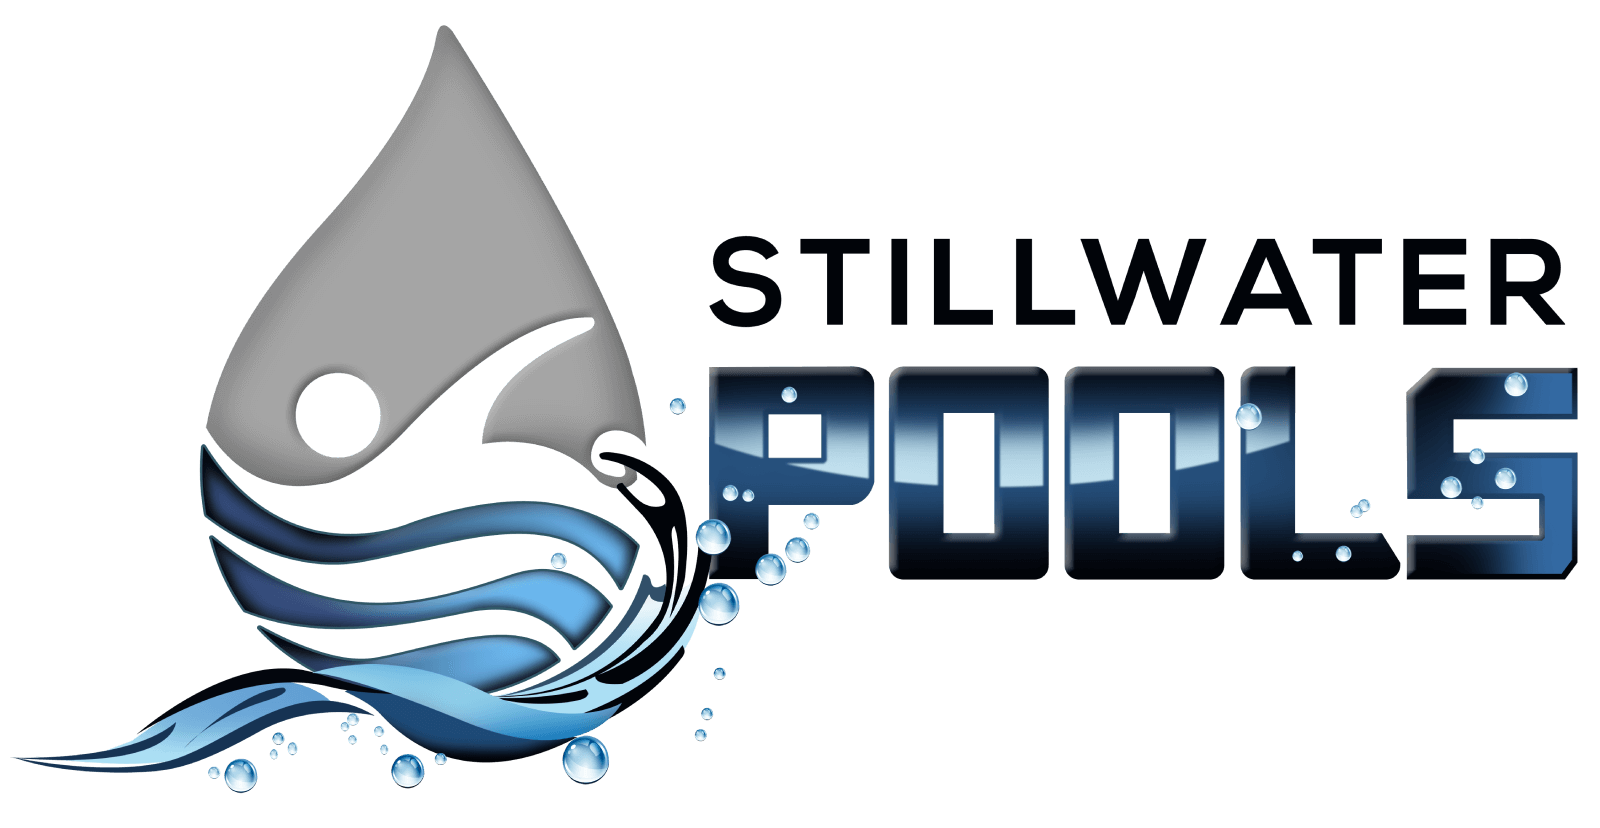 Stillwater Pools Inc.